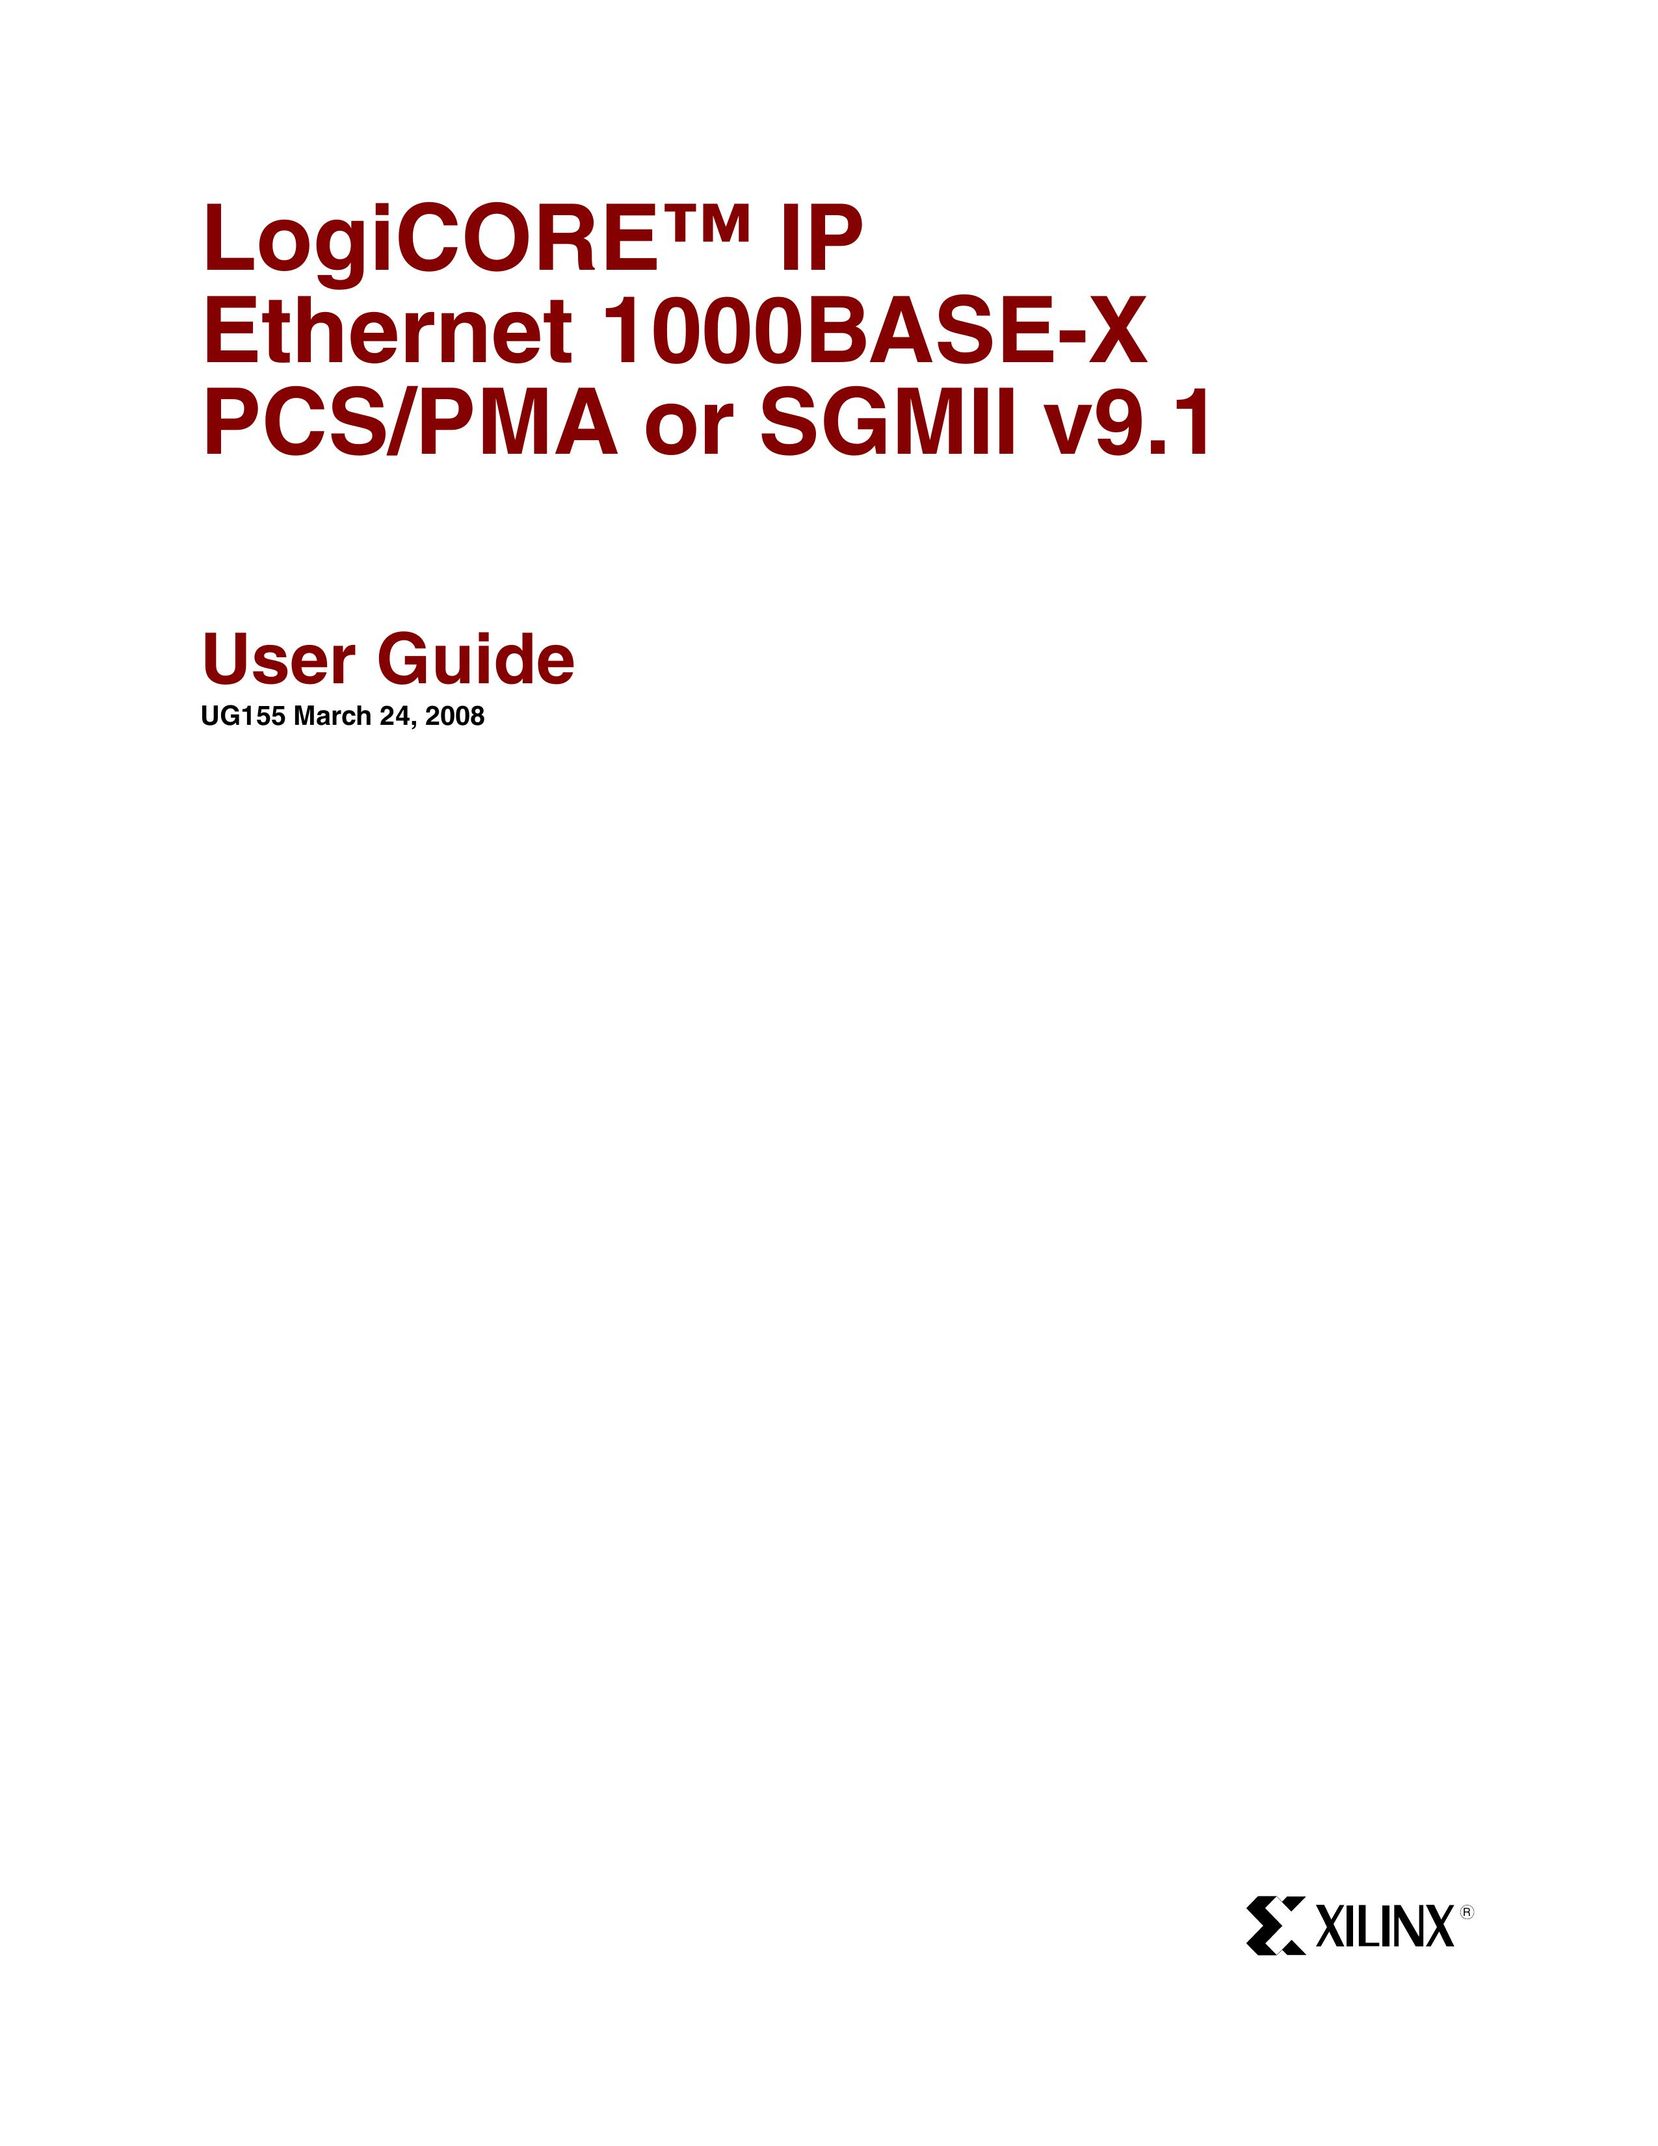 Xilinx 1000BASE-X Network Card User Manual